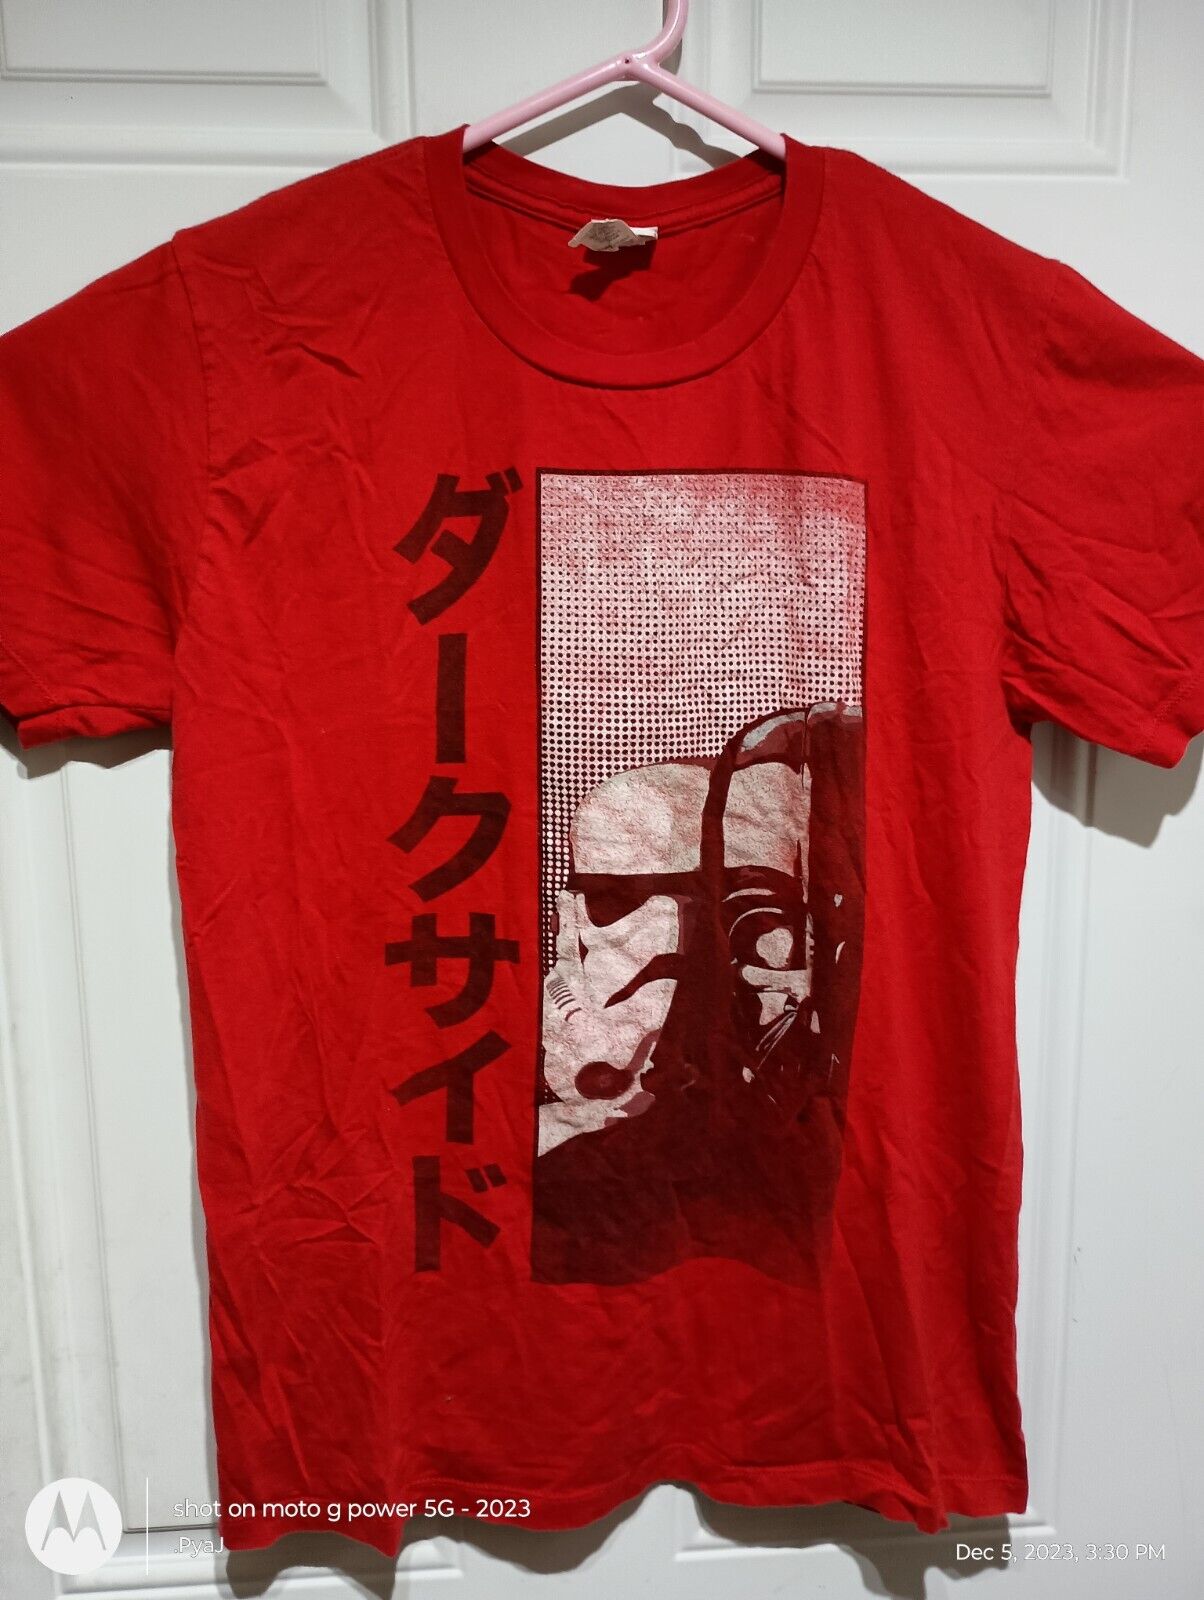 VTG Star Wars Darth Vader Japanese Red Cotton T shirt Size Large Lucasfilm